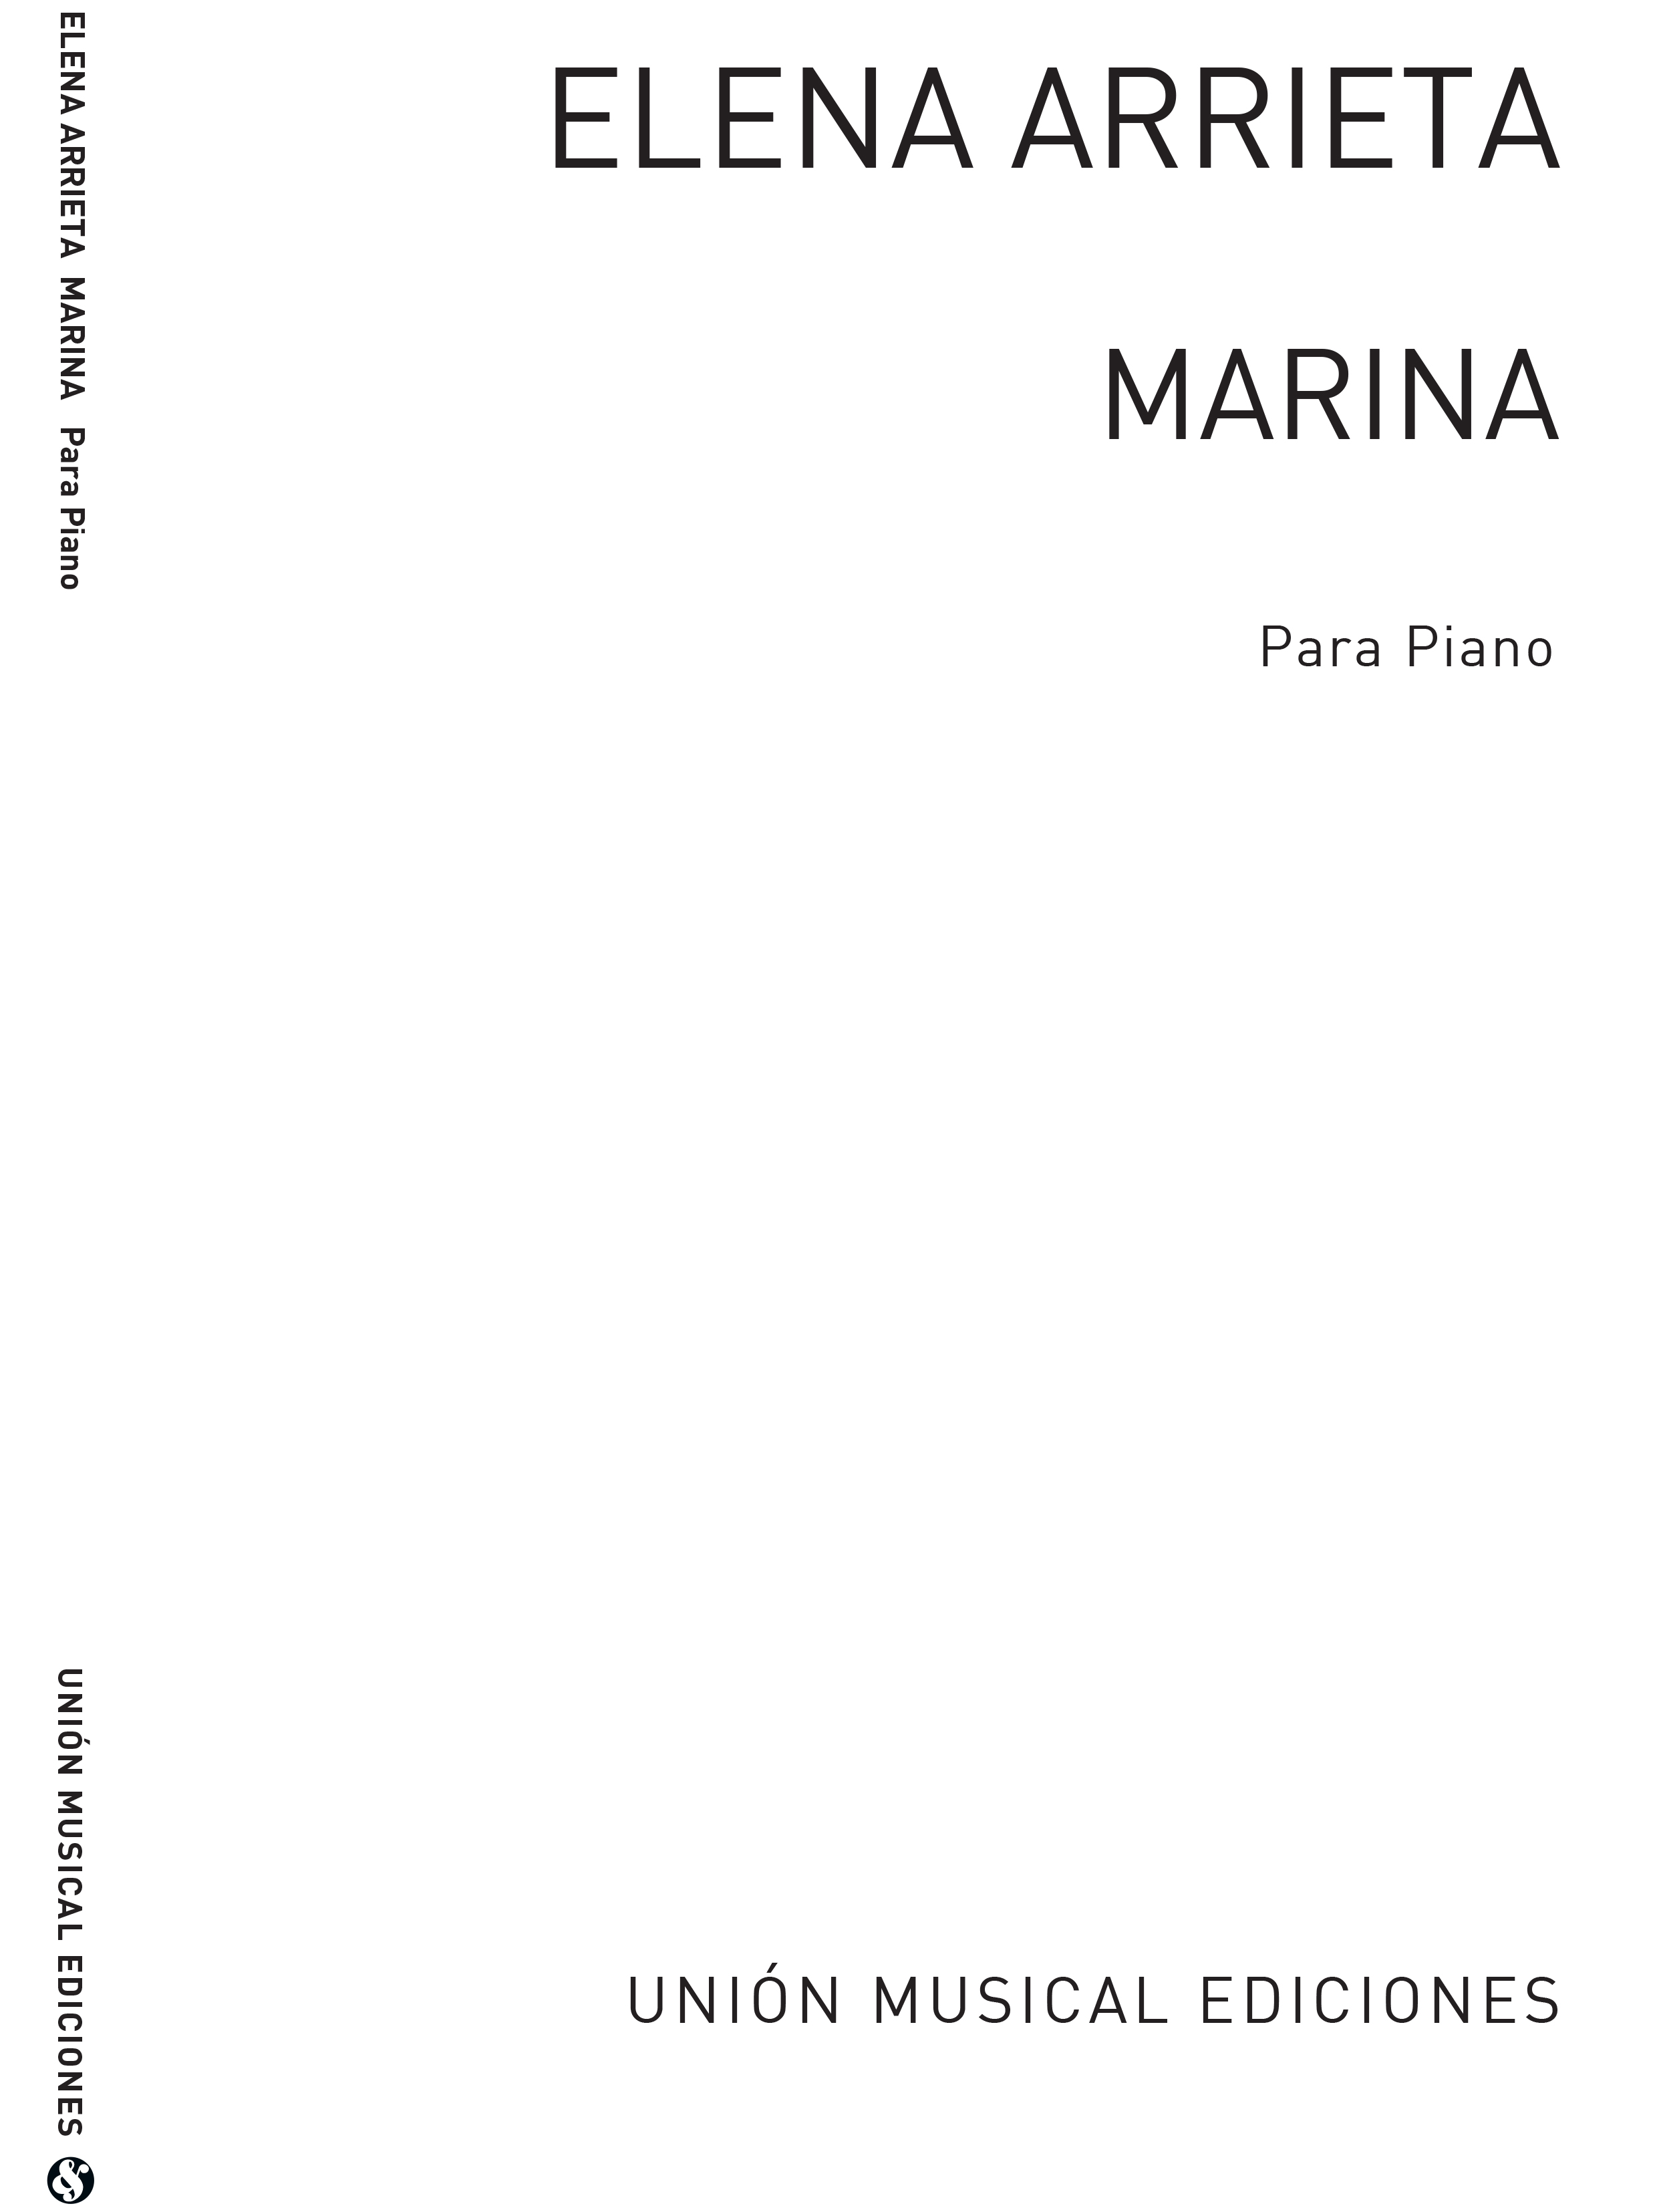 Emilio Arrieta: Brindis No.6 from Marina for Tenor and Piano